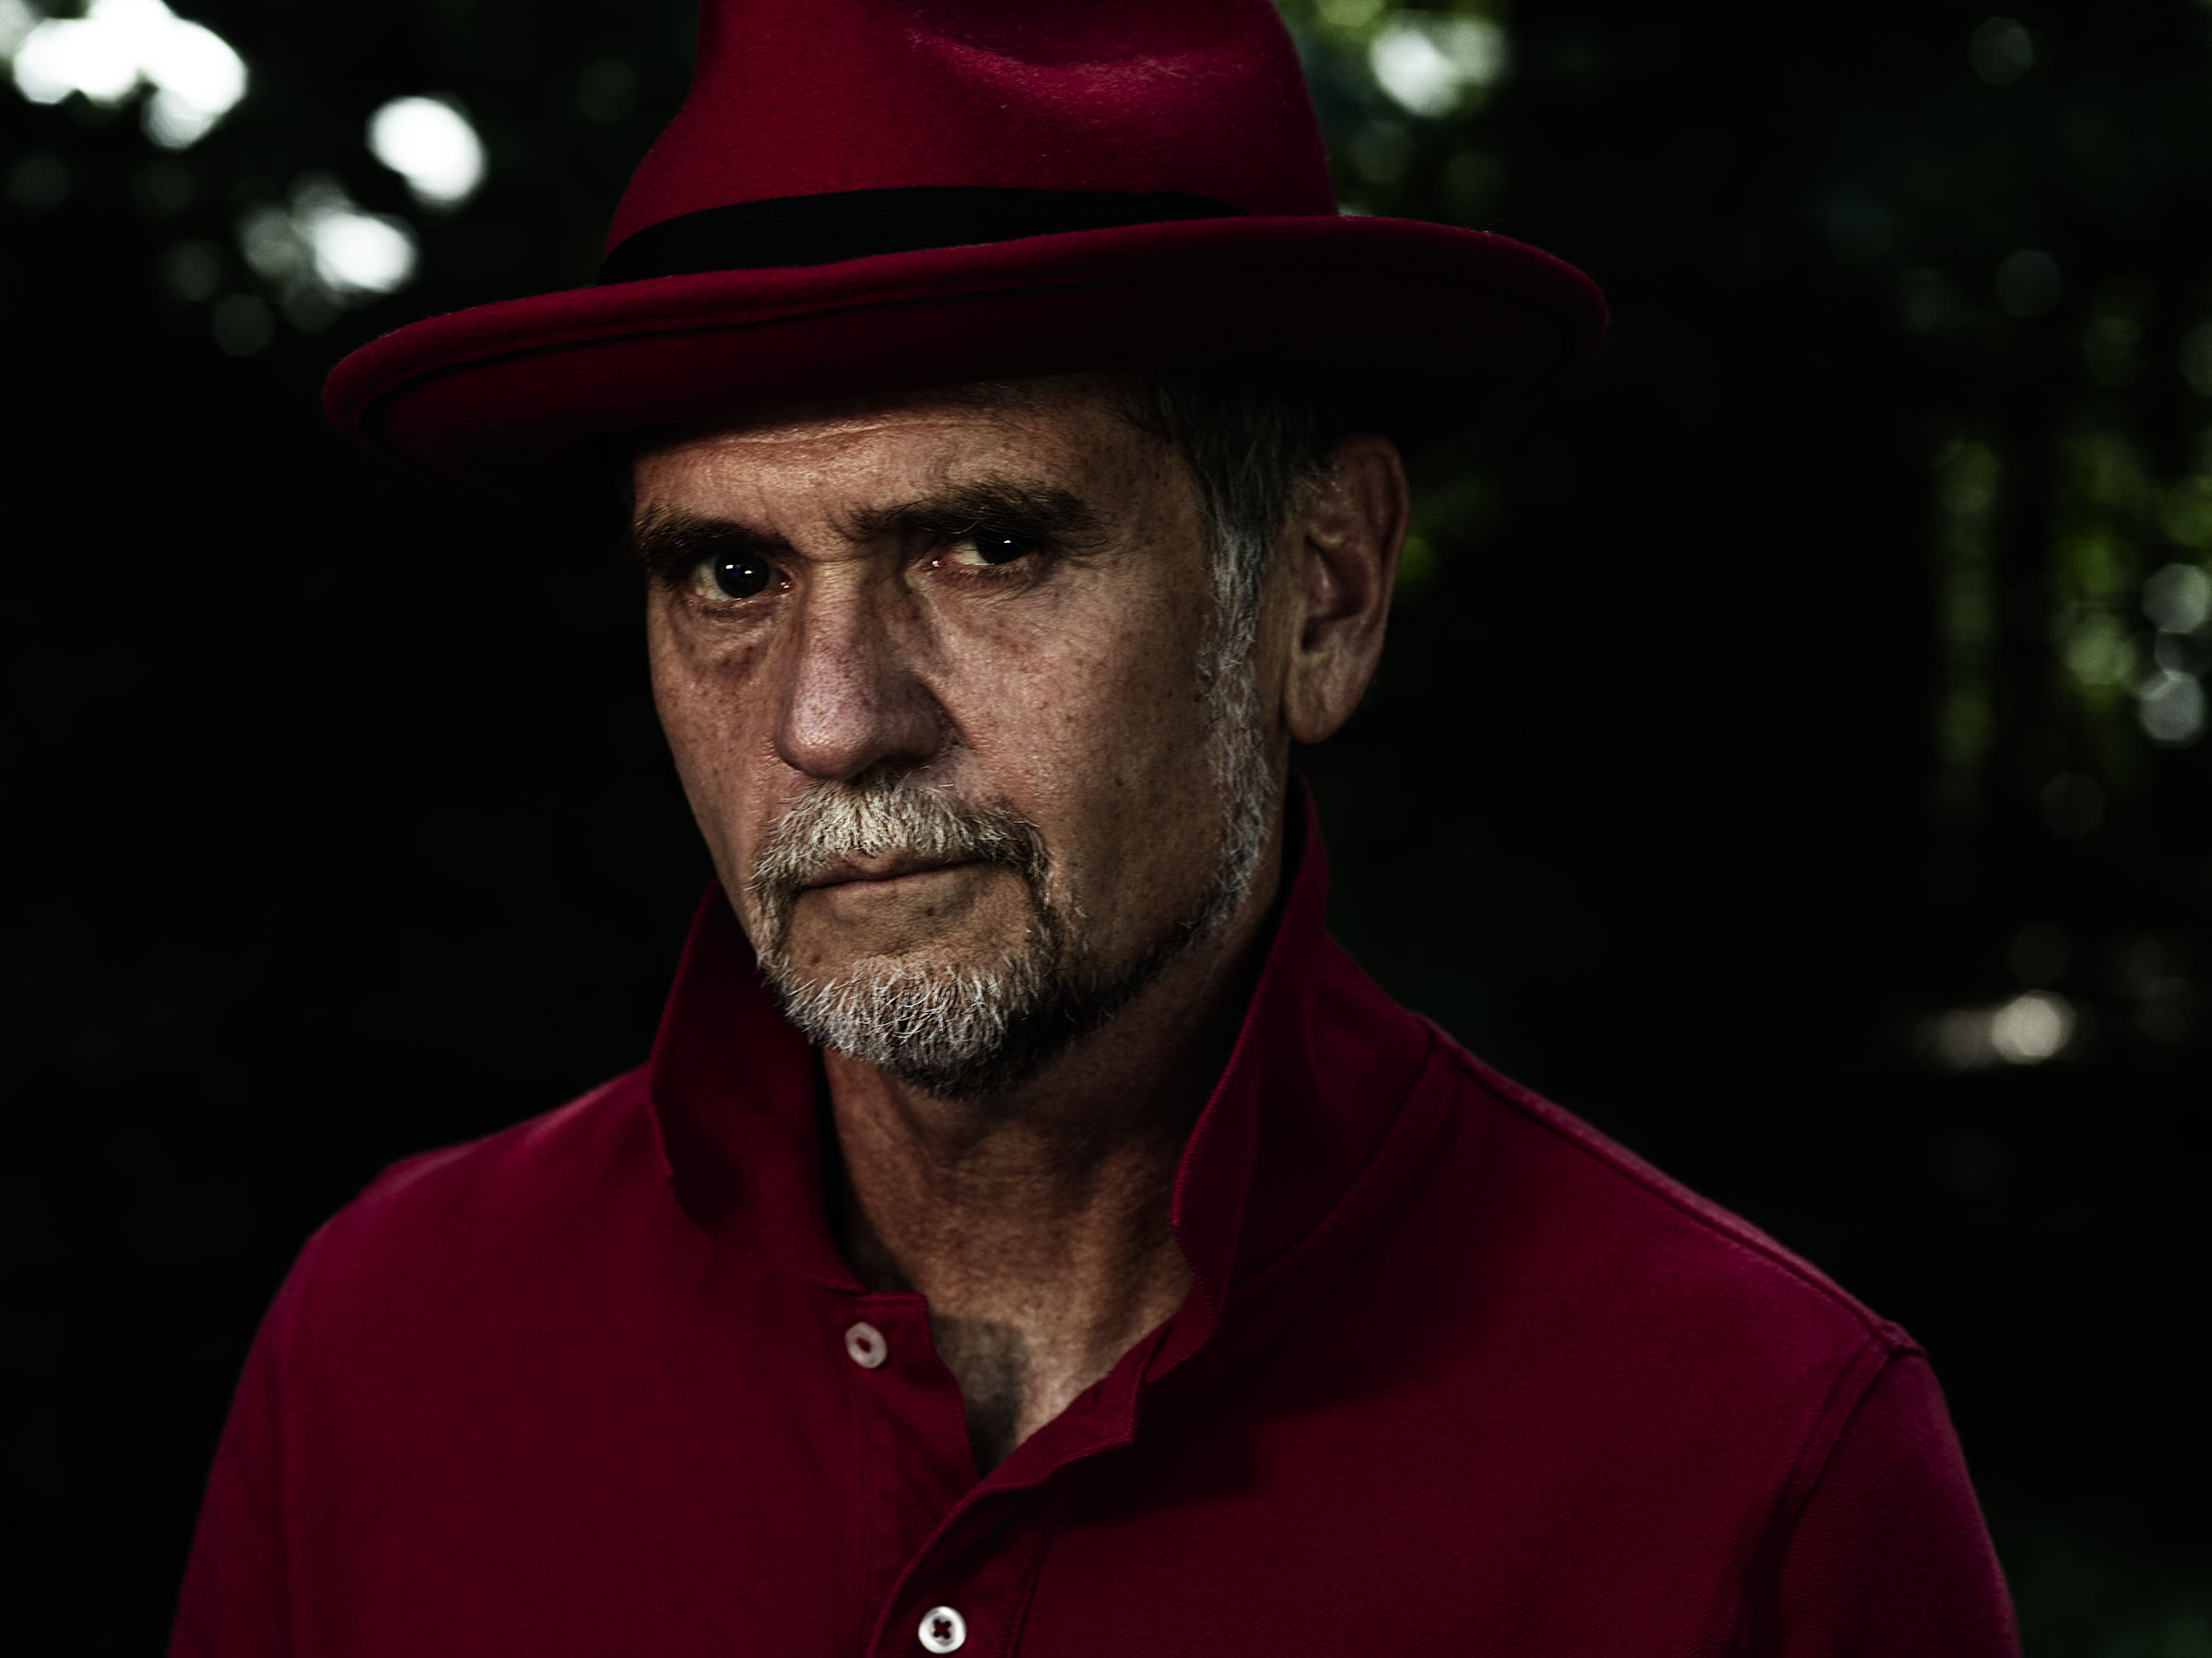 Tony Hats, Friend, Neighbor, Author, Creative Color Portrait by Wick Beavers NYC Portrait Photographer